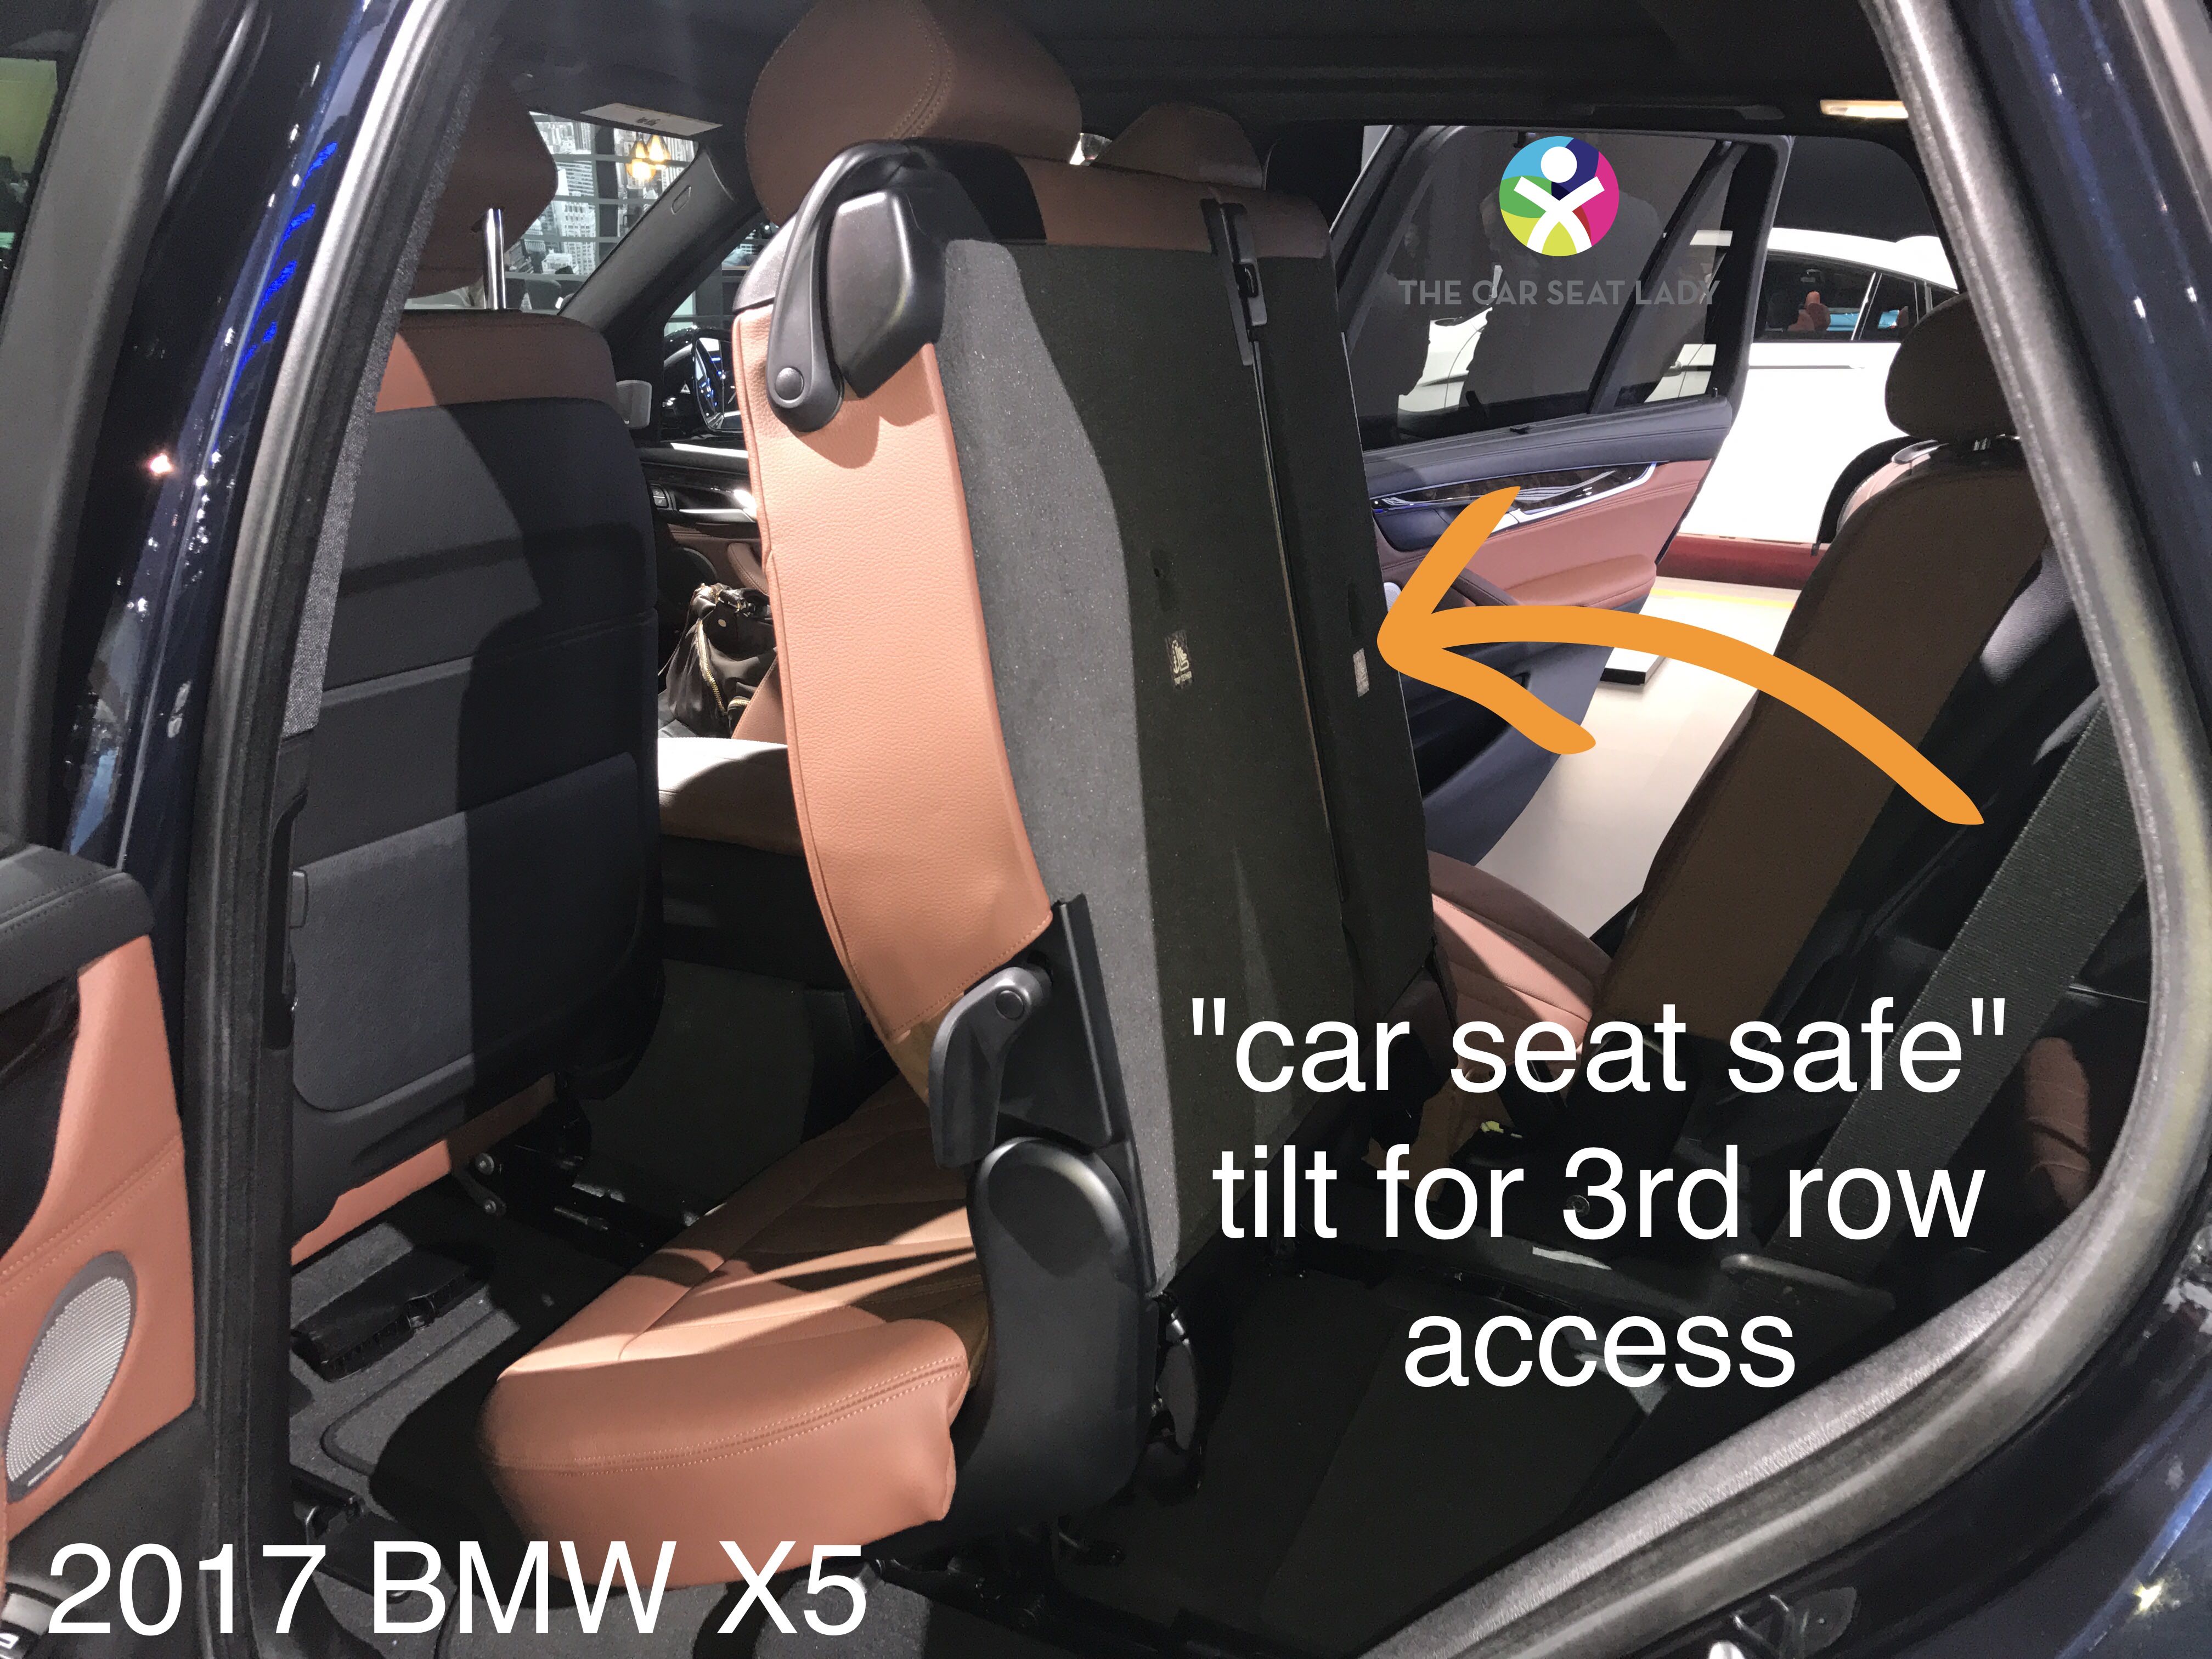 The Car Seat LadyBMW X5 - The Car Seat Lady